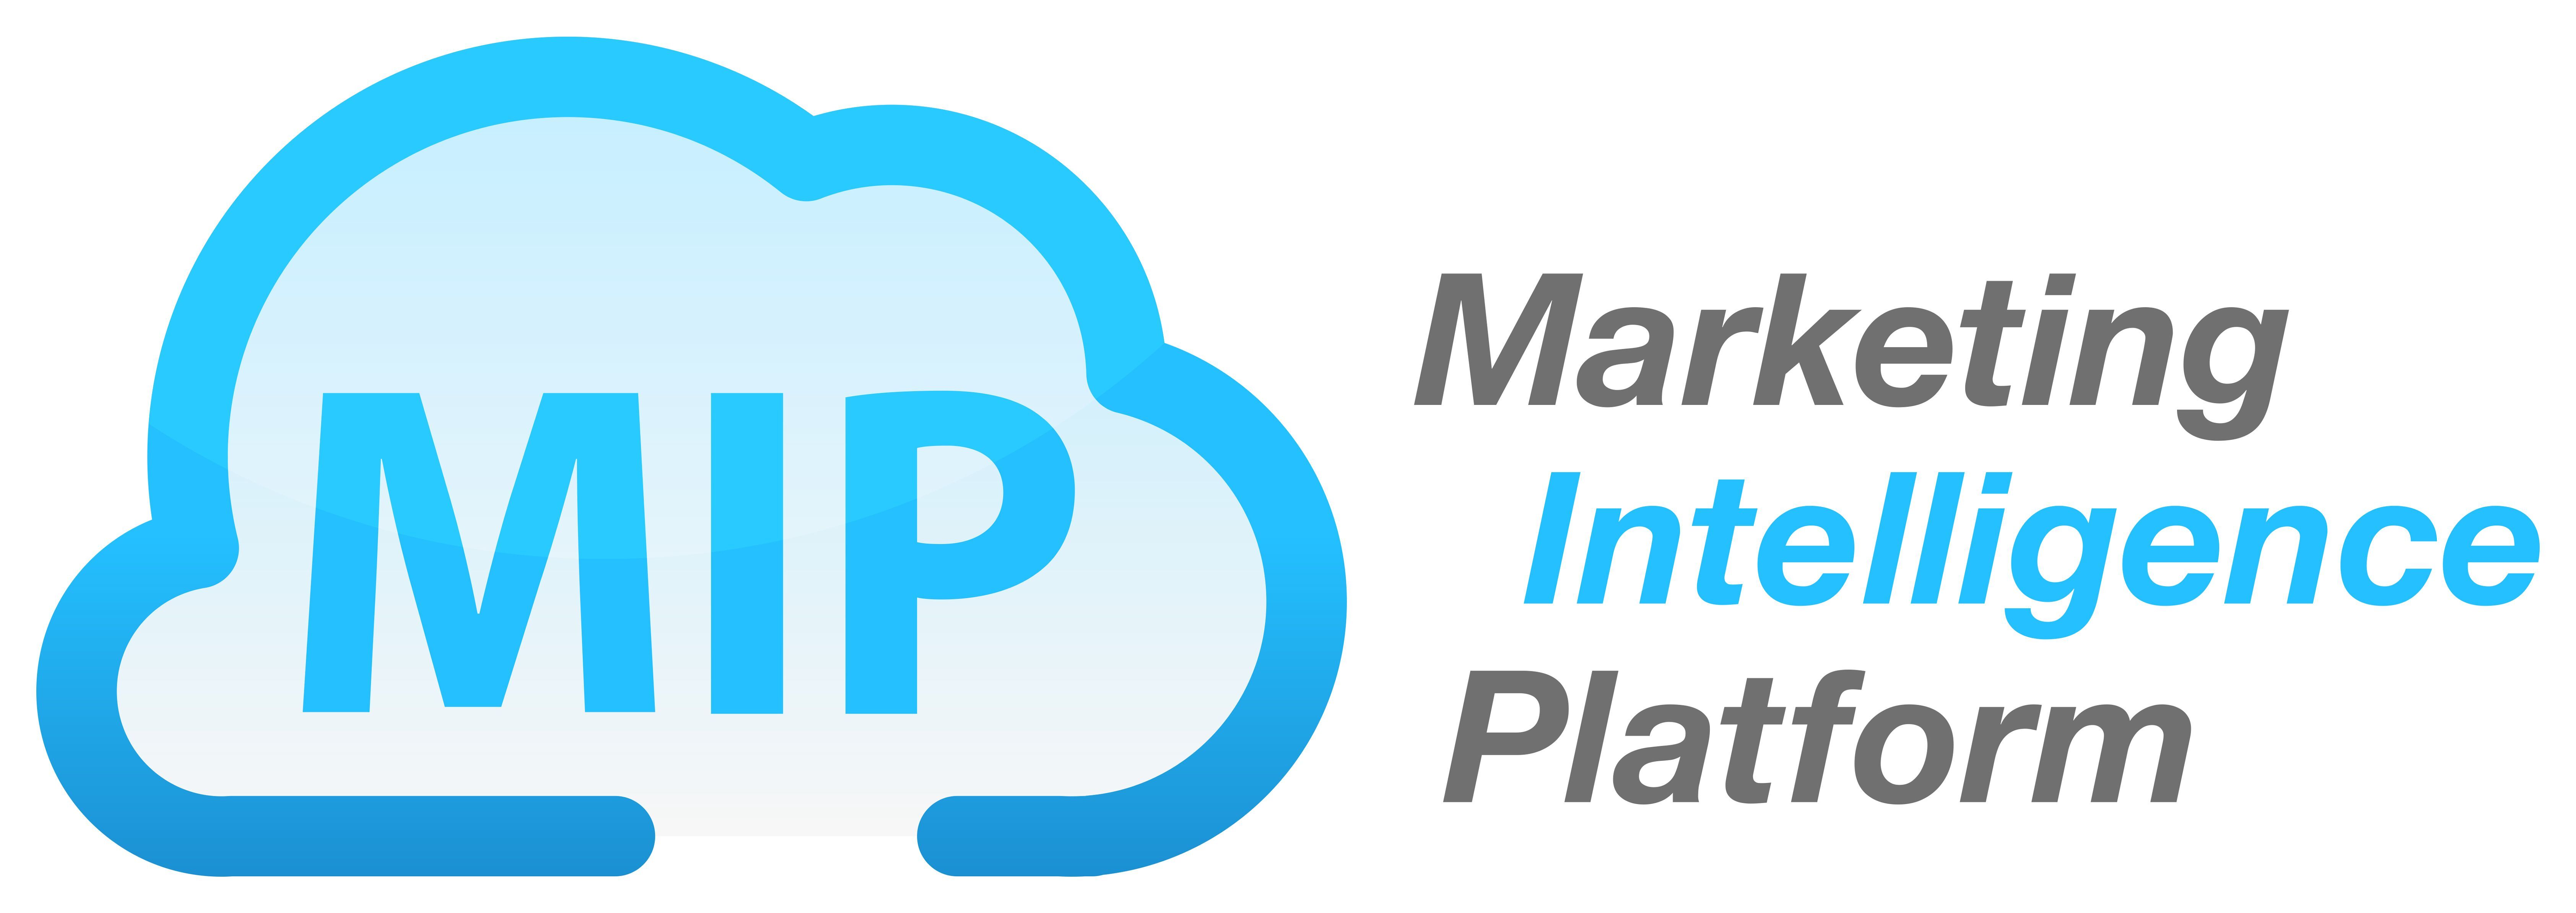 Mip R Marketing Intelligence Platformがスマートフォンに対応 技研商事インターナショナル株式会社のプレスリリース